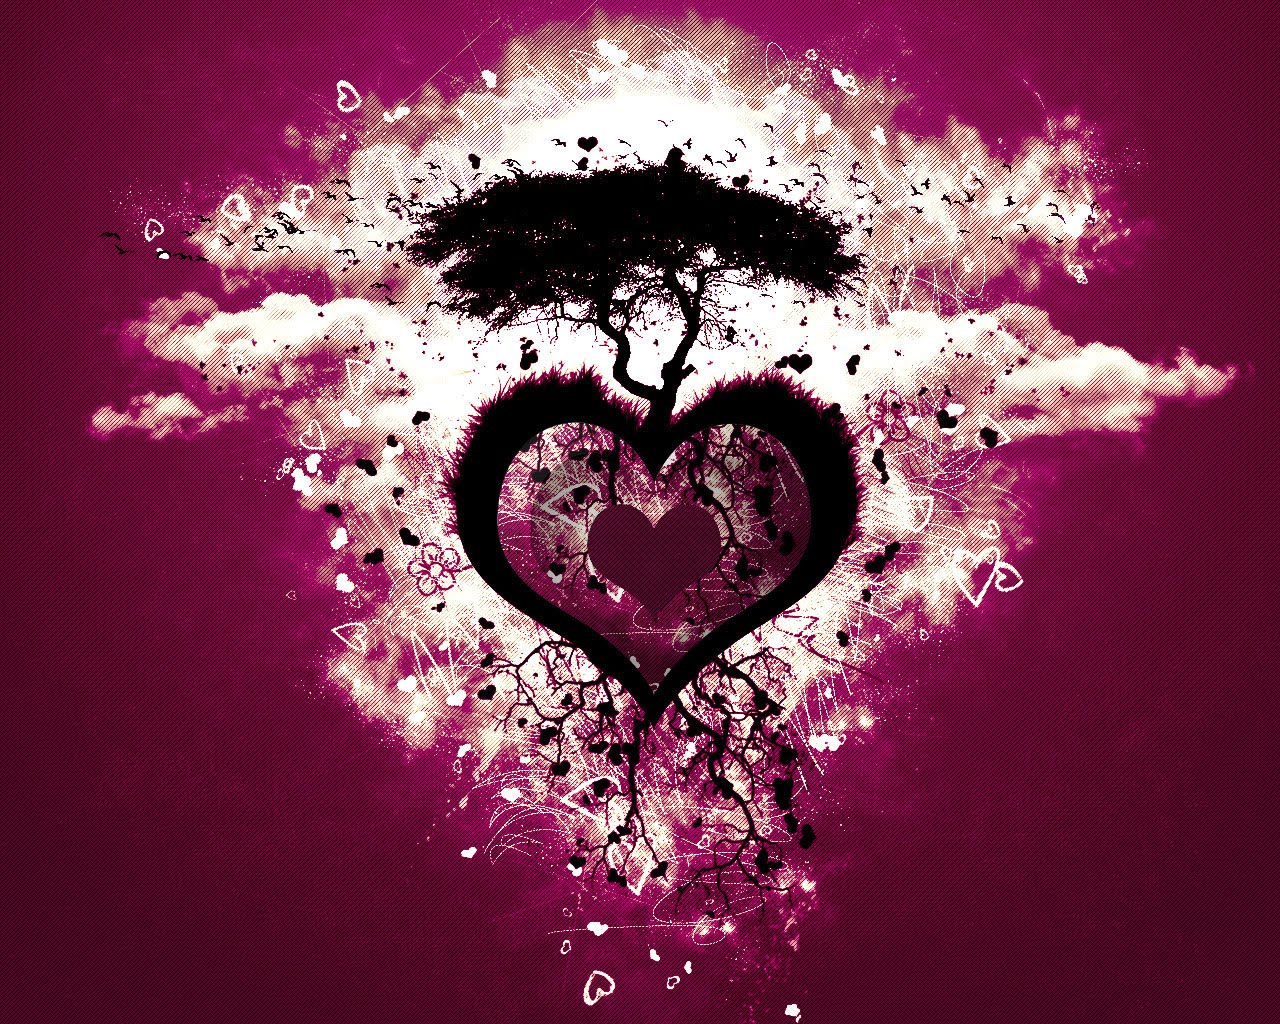 http://1.bp.blogspot.com/_bSB353YdZu8/S_AZ-ci8K2I/AAAAAAAAACU/TxeQofcOhWA/s1600/Purple-heart-love-tree-original.jpg